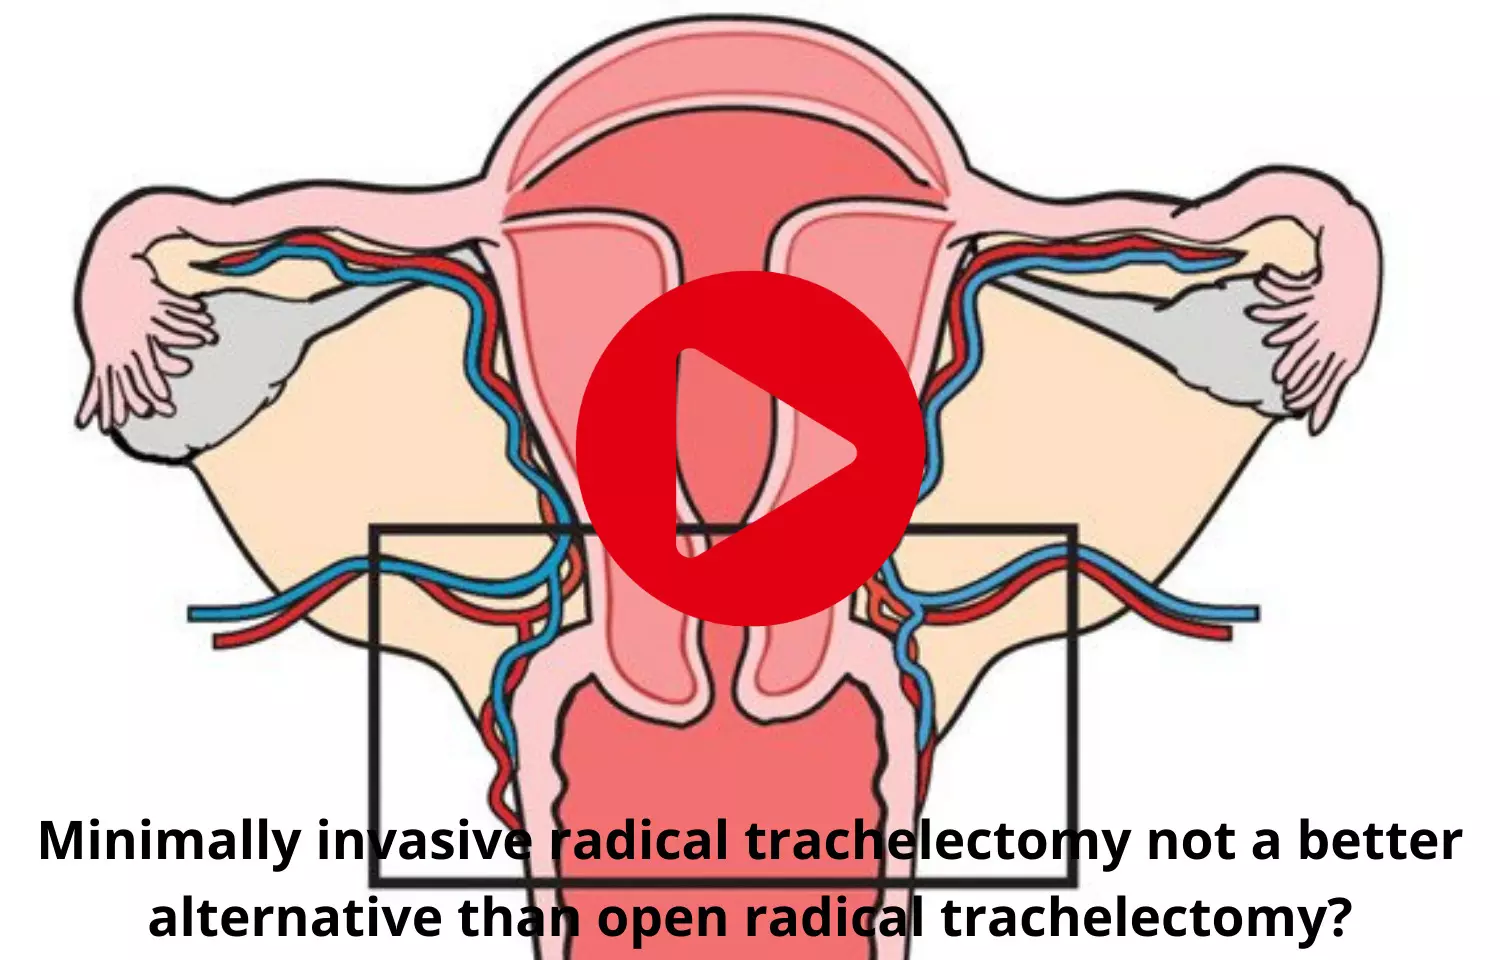 Minimally invasive radical trachelectomy not a good alternative for open radical trachelectomy?